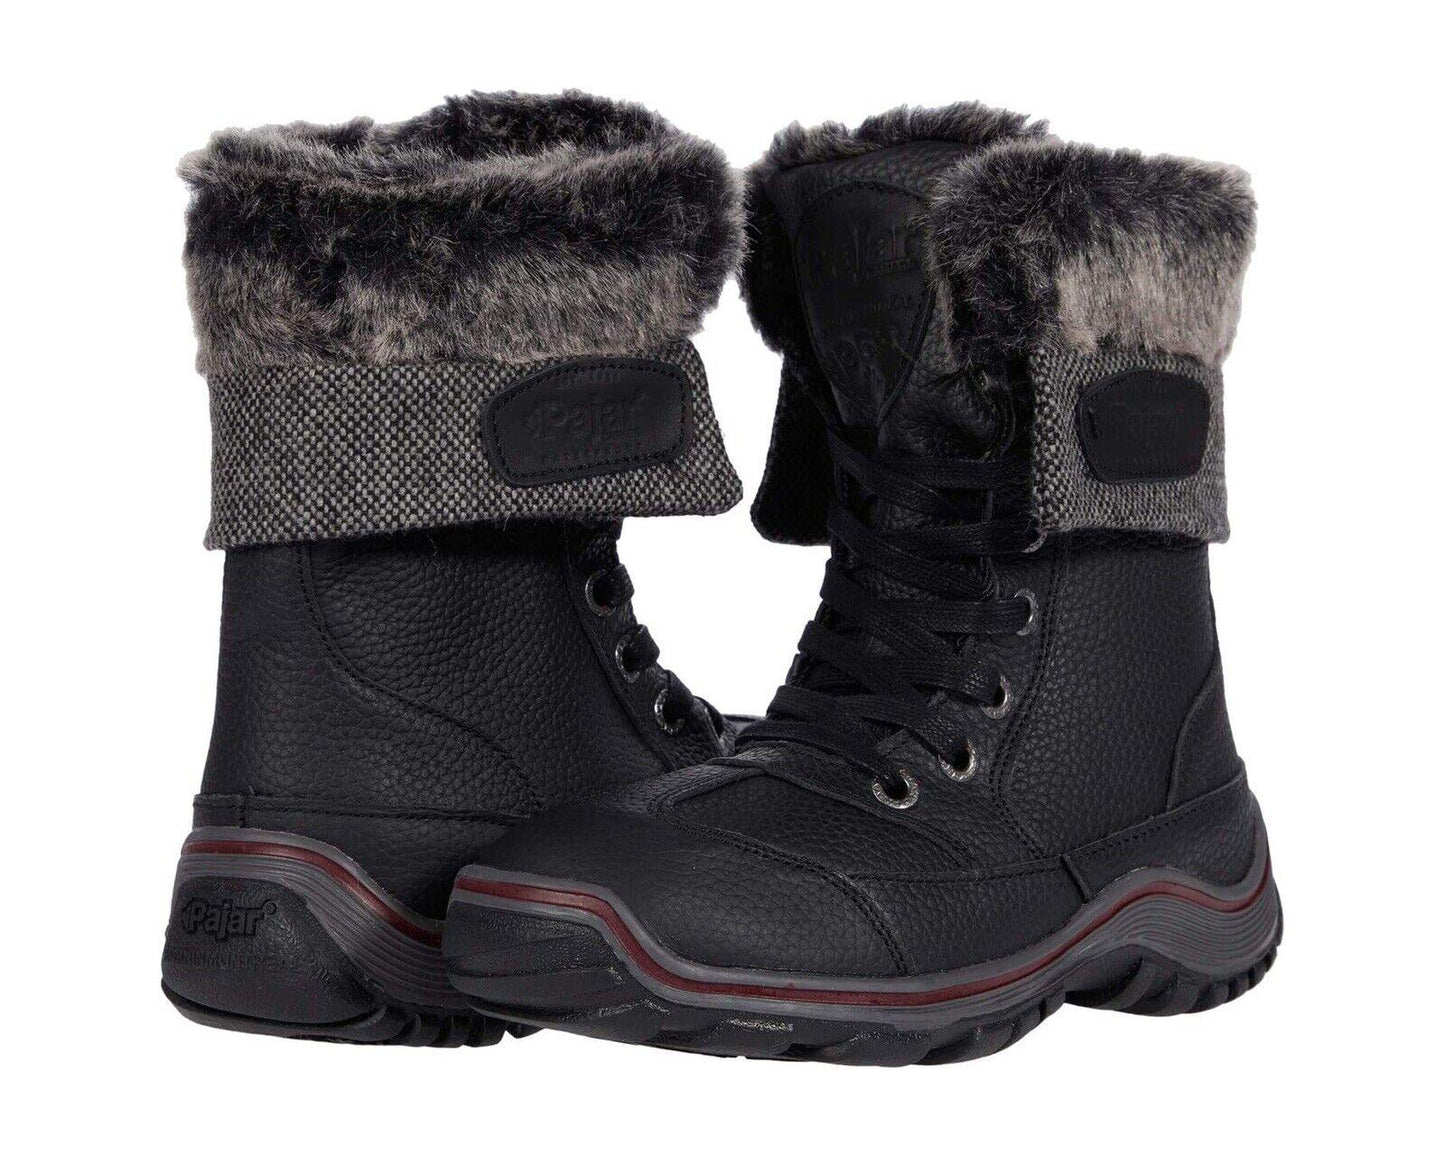 Pajar Alice Black Waterproof Snow Boot Leather Dual Tweed Faux Fur Cuff  36 EU/5-5.5 M US - SVNYFancy